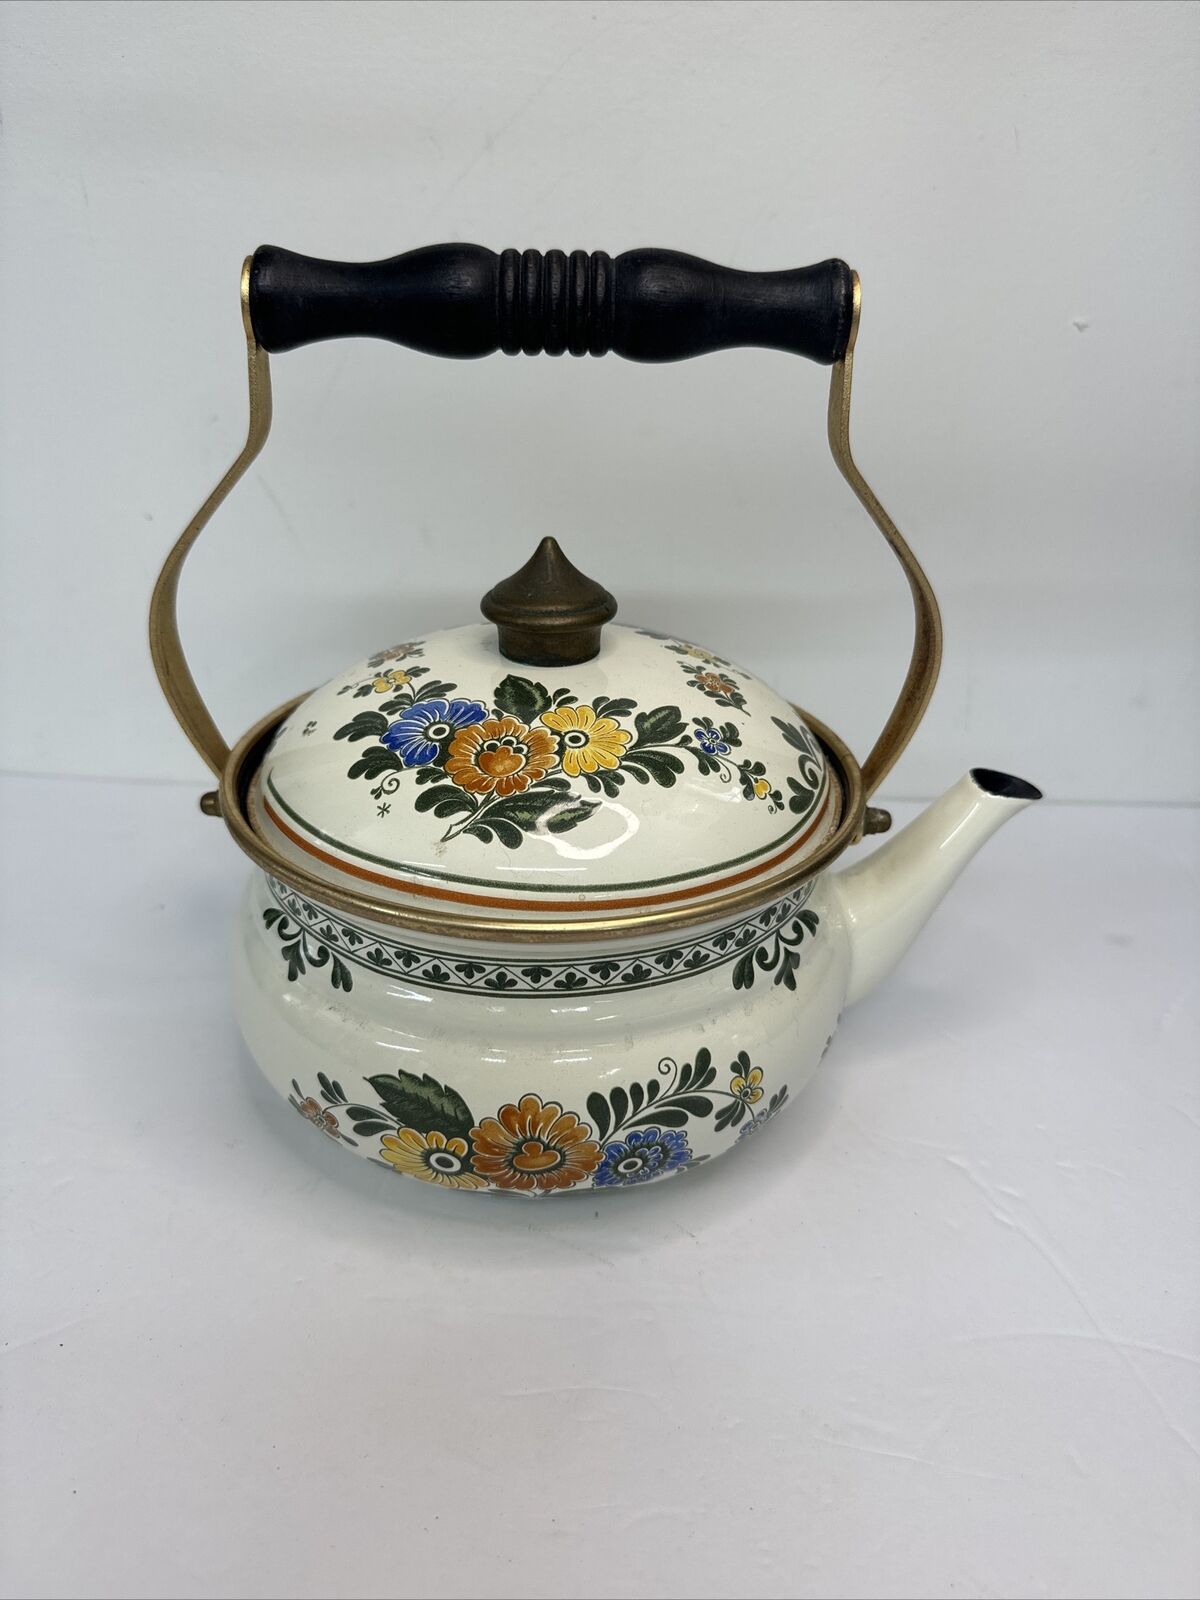 ASTA Enamelware Tea Kettle 1960s Teapot Brass Handles Floral Vtg West Germany 